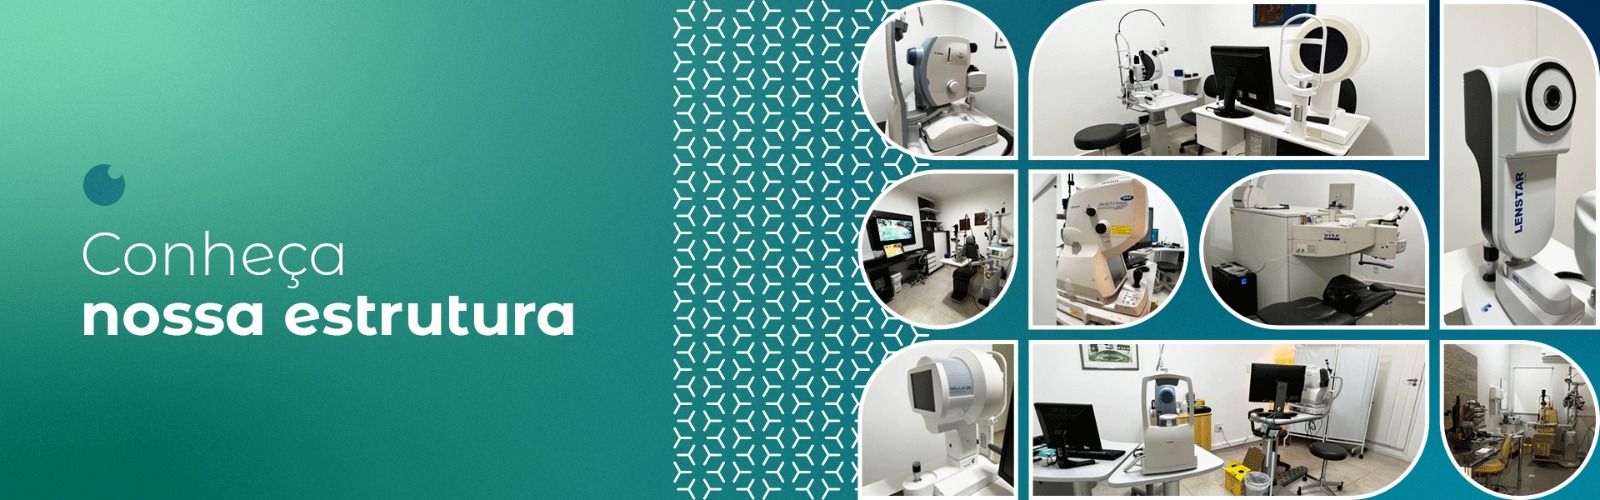 Banner 1 - IDECO - Instituto especializado em oftalmologia